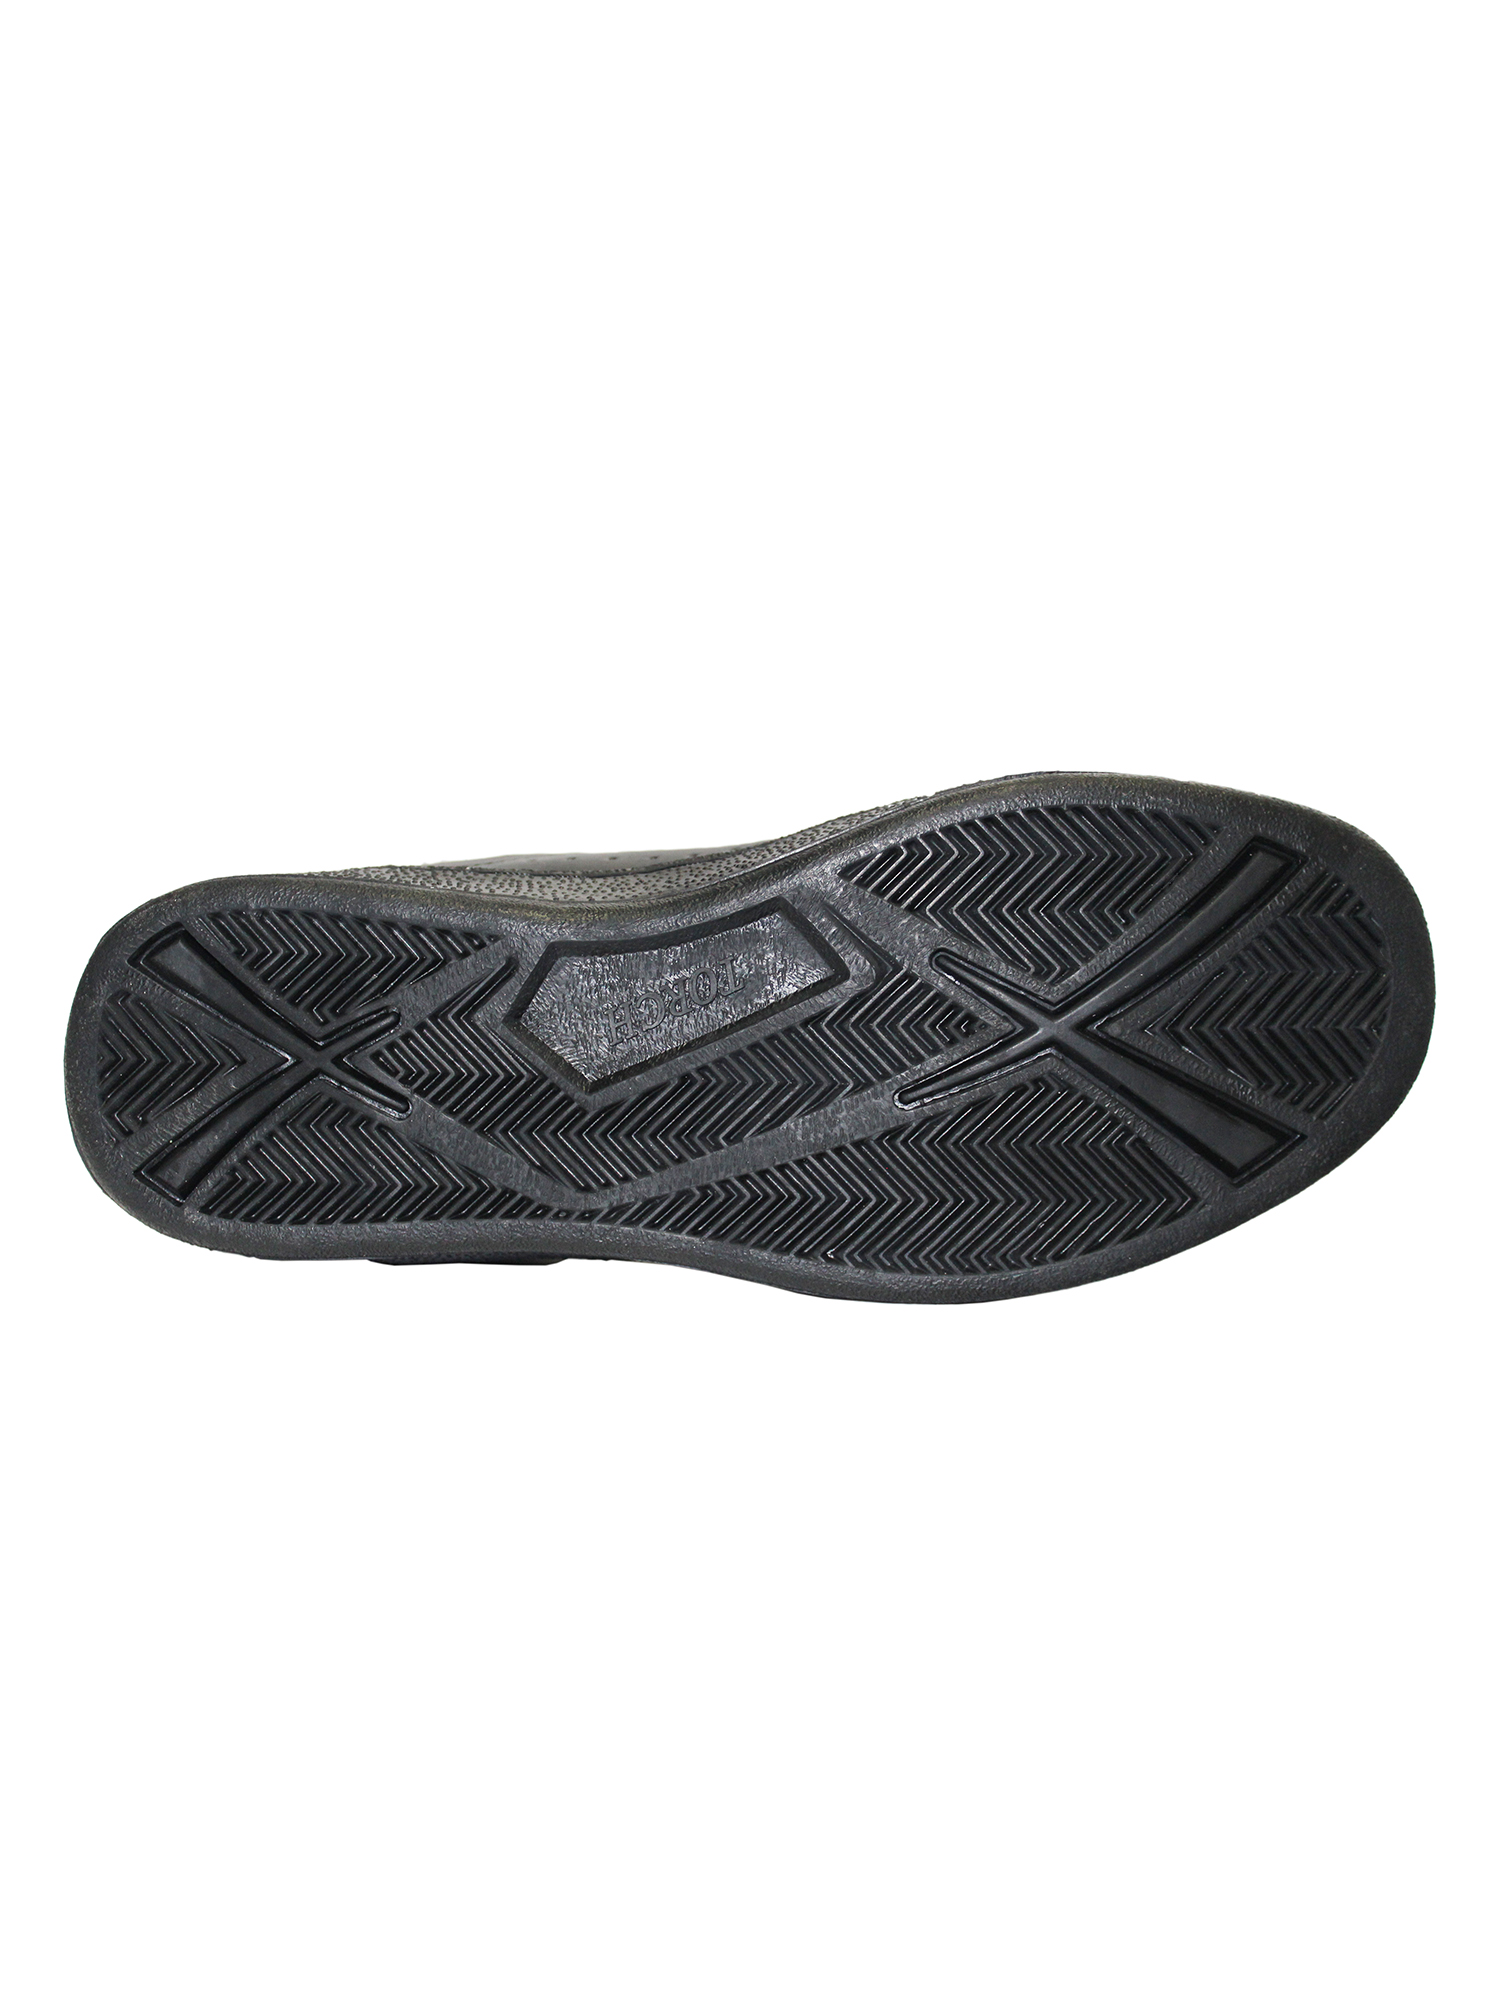 Tanleewa Men's Leather Strap Sneakers Lightweight Hook and Loop Walking Shoe Size 9.5 Adult Male - image 3 of 4